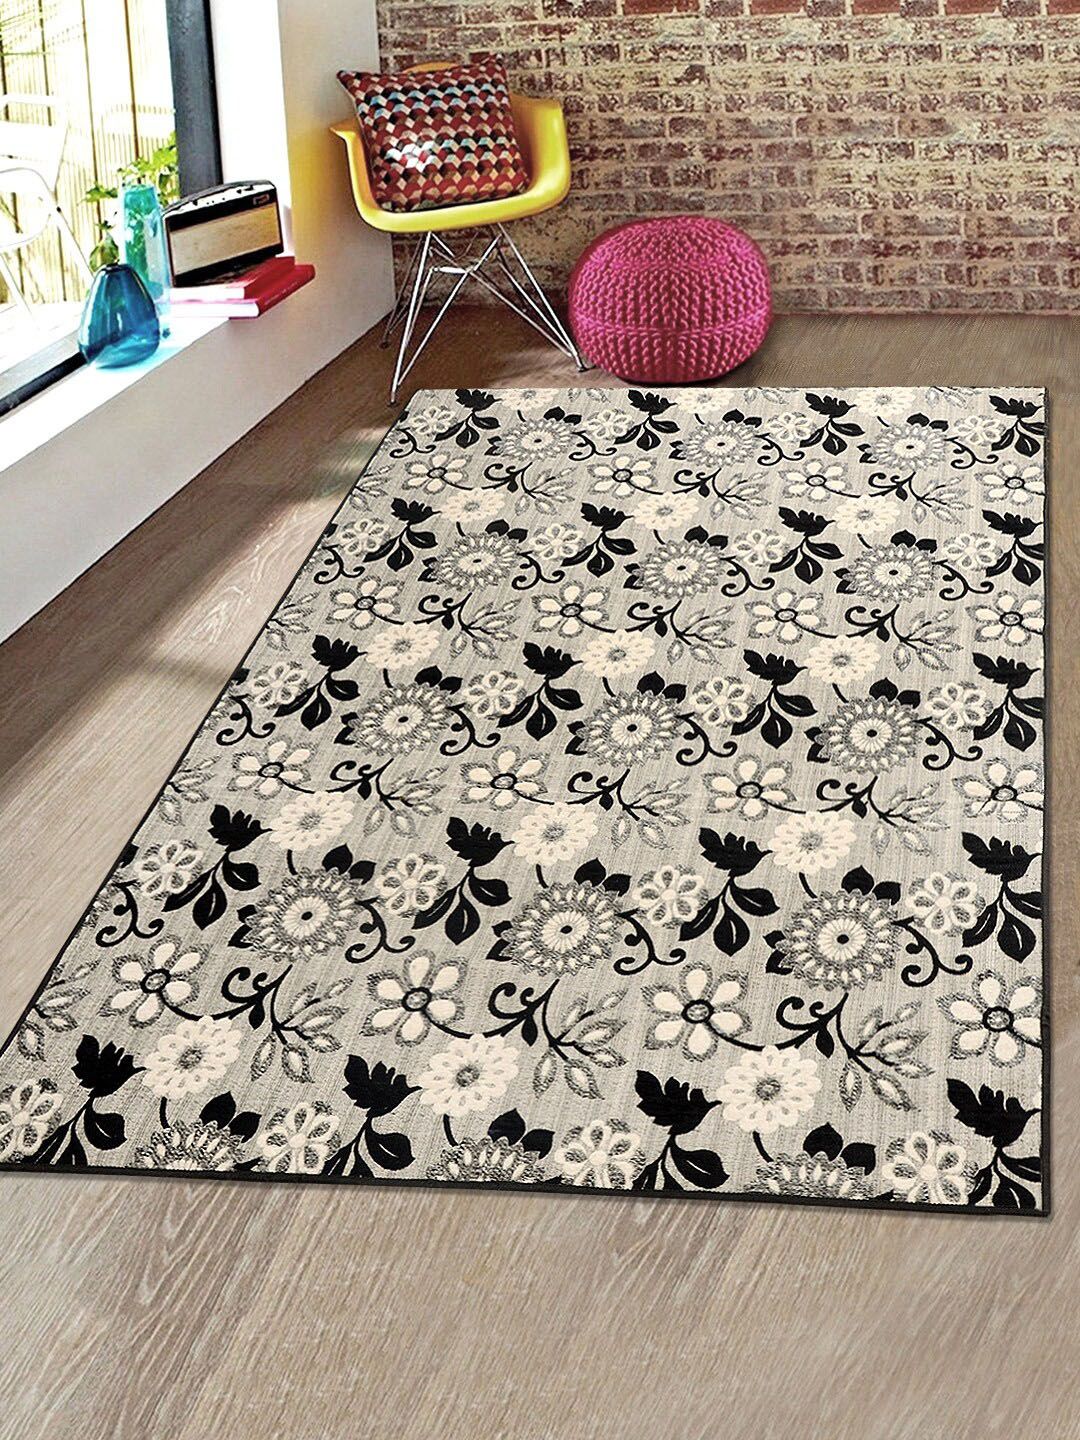 Saral Home Unisex Grey & Black Floral Printed Anti-Skid Carpet Price in India